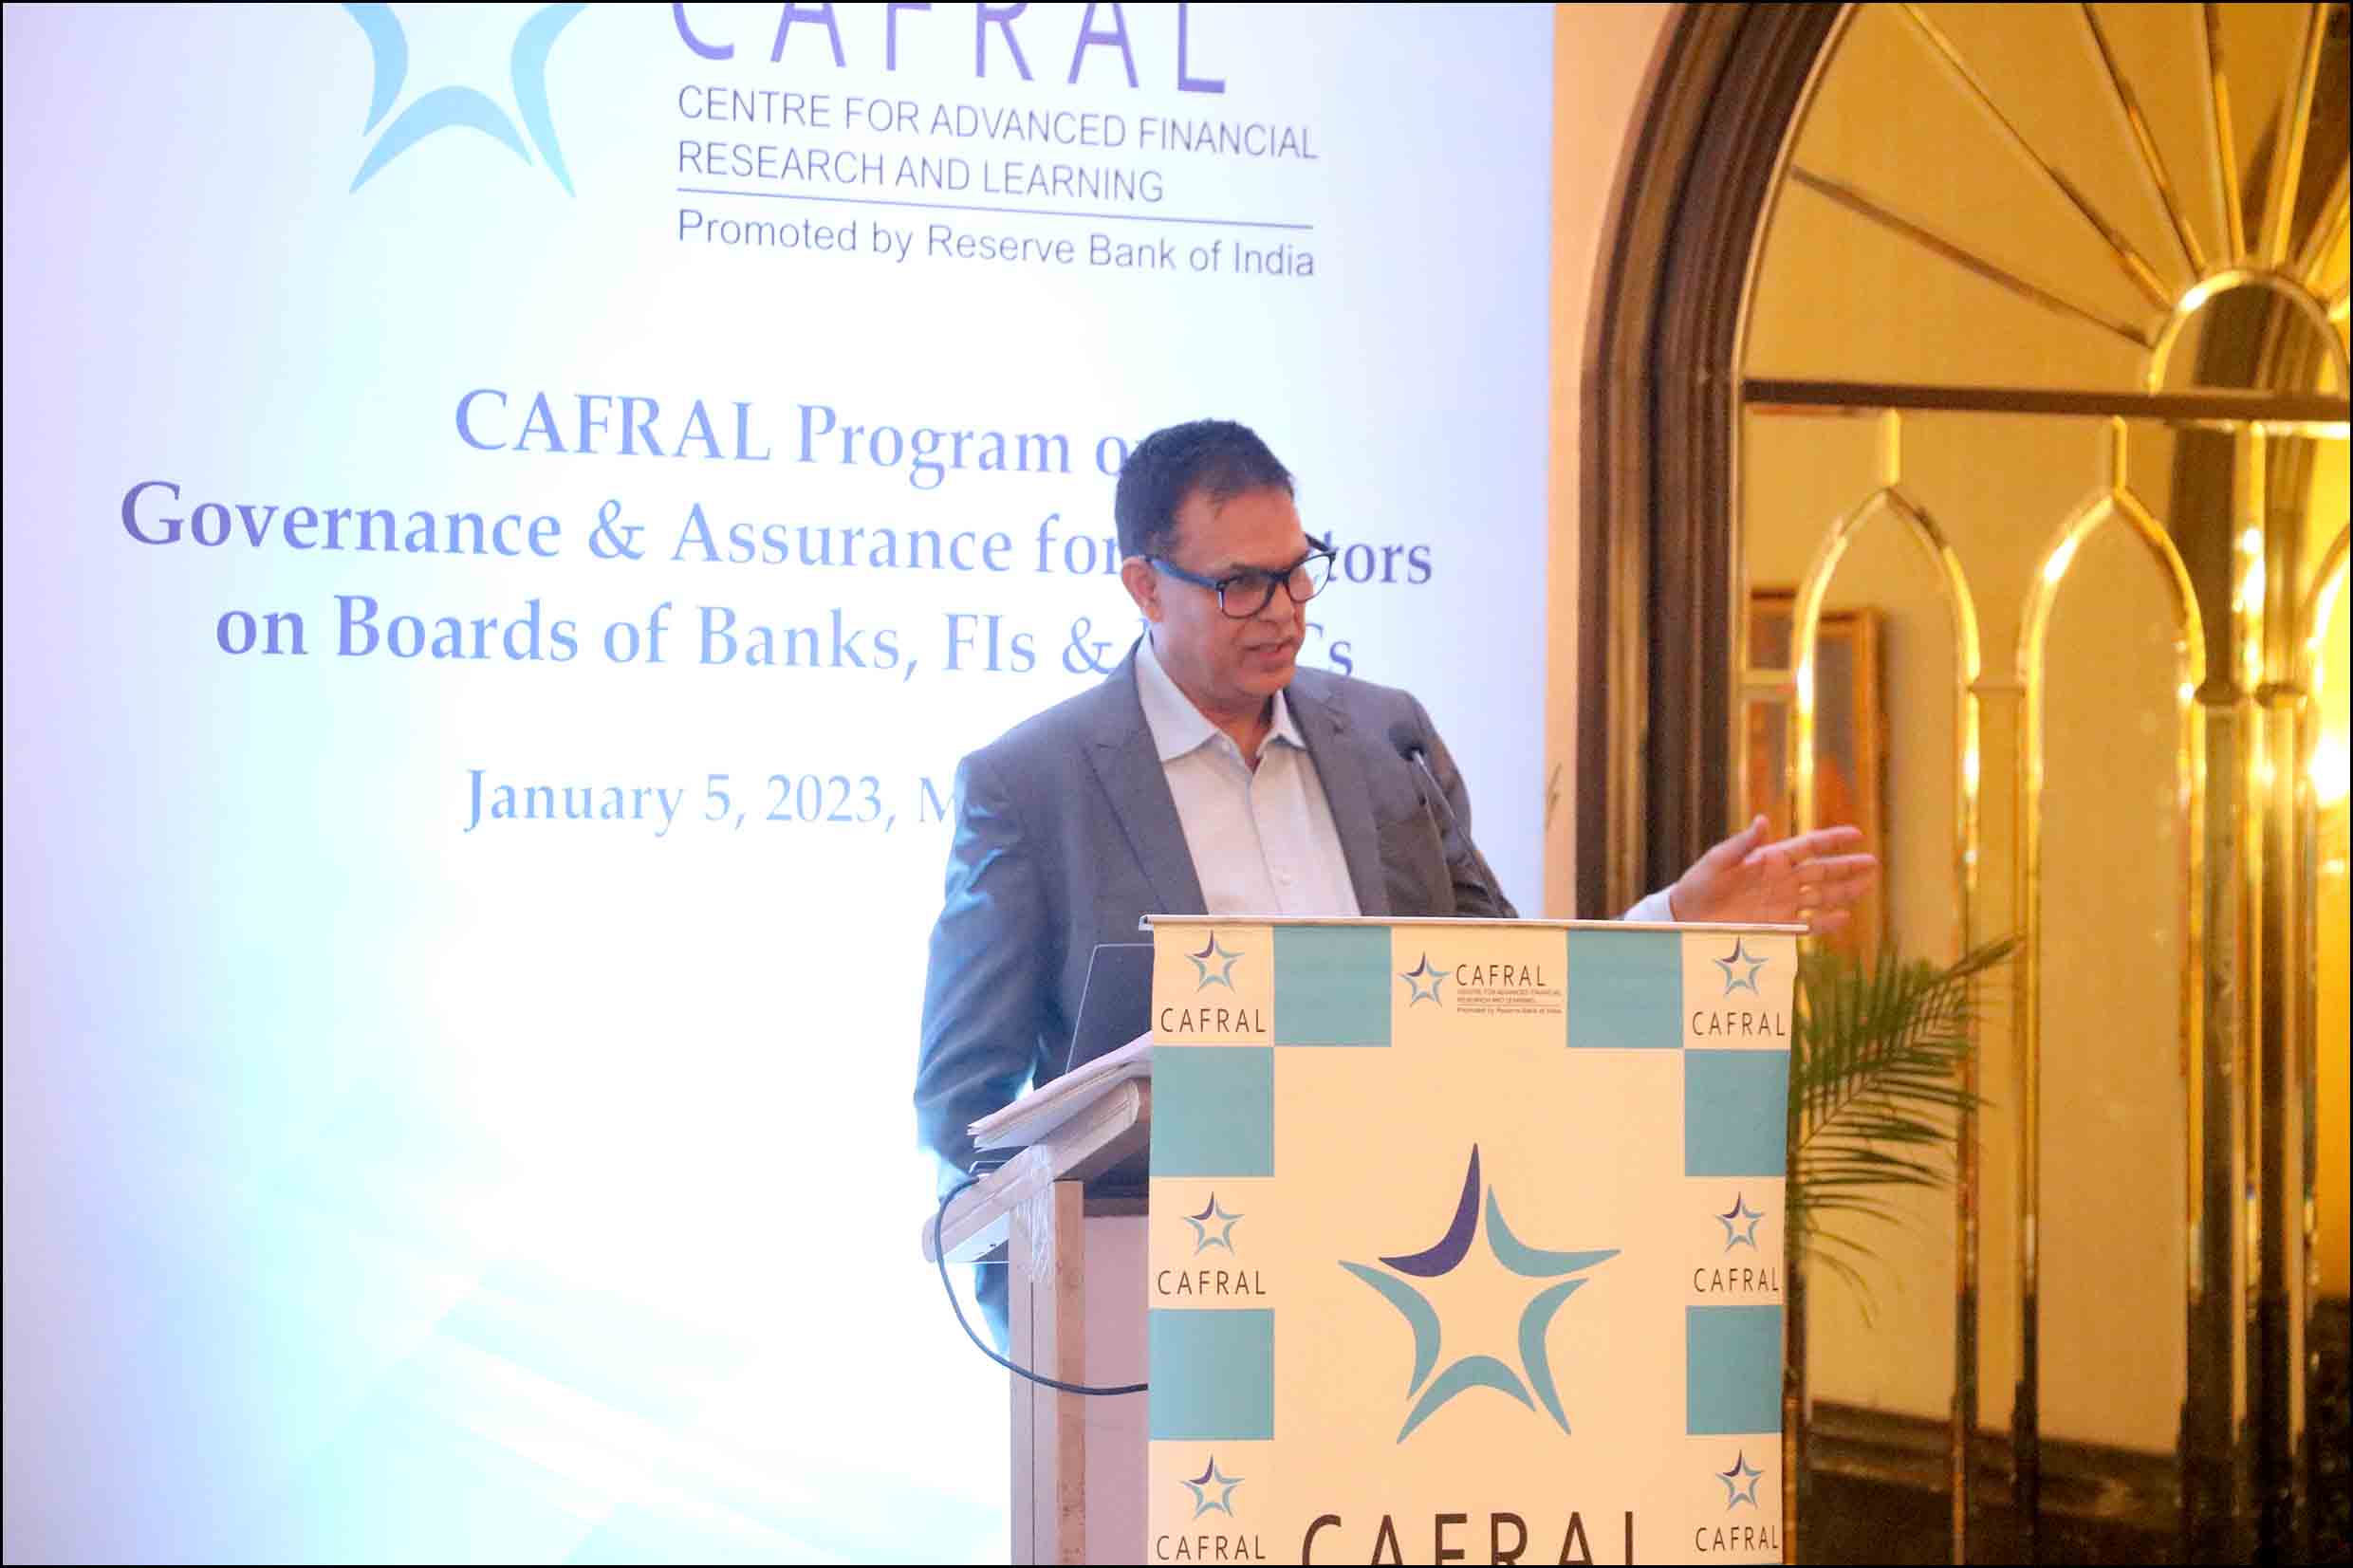 Jyoti Kumar Pandey, Senior Program Director, CAFRAL